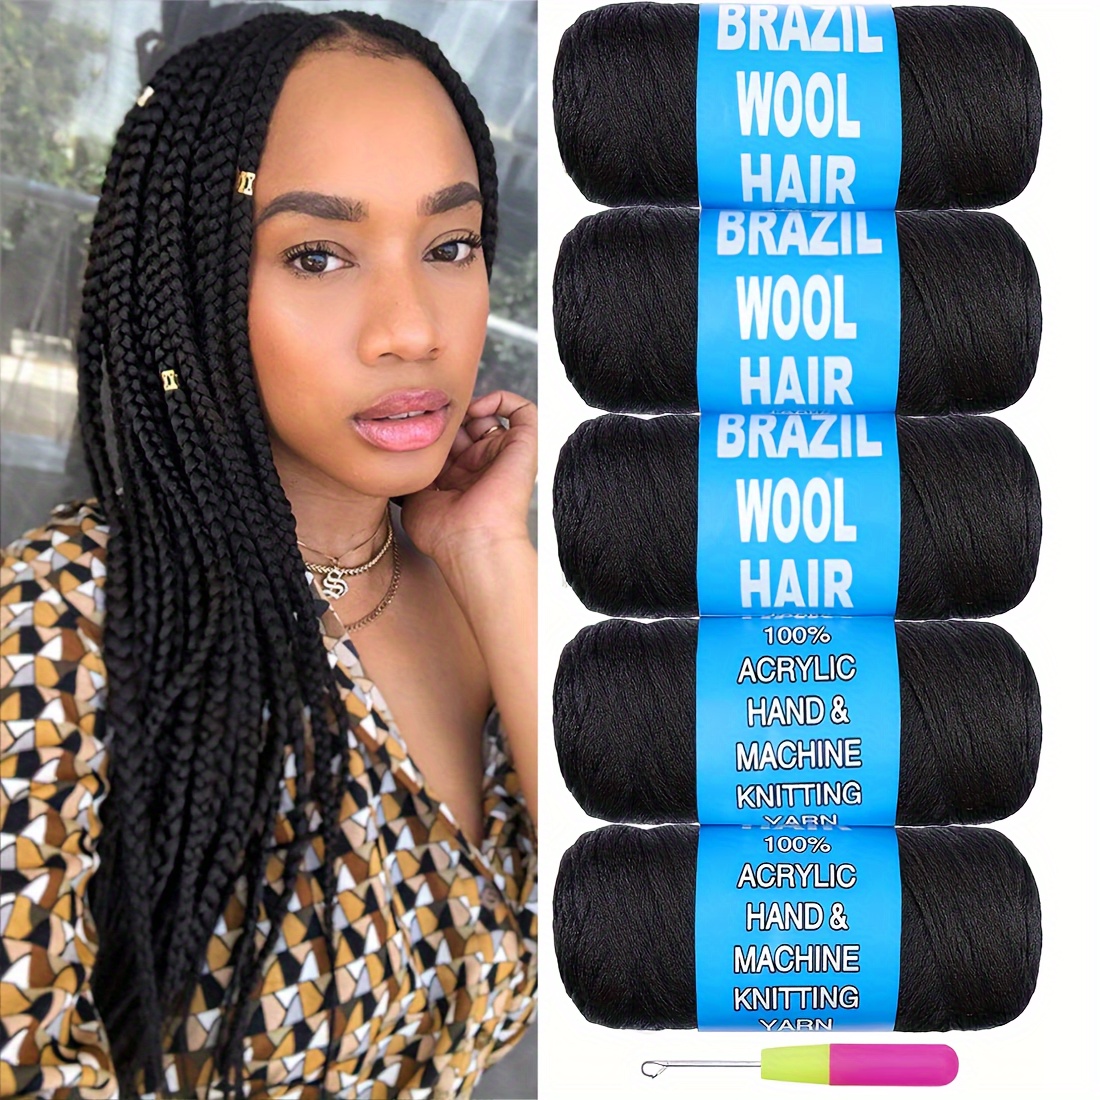  BLUPLE Brazilian Wool Hair 1 Roll Black Acrylic Yarn for  African Hair Braiding Sengalese Twisting Jumbo Braids/Crochet Faux  Locs/Wraps/Dreadlocks : Beauty & Personal Care